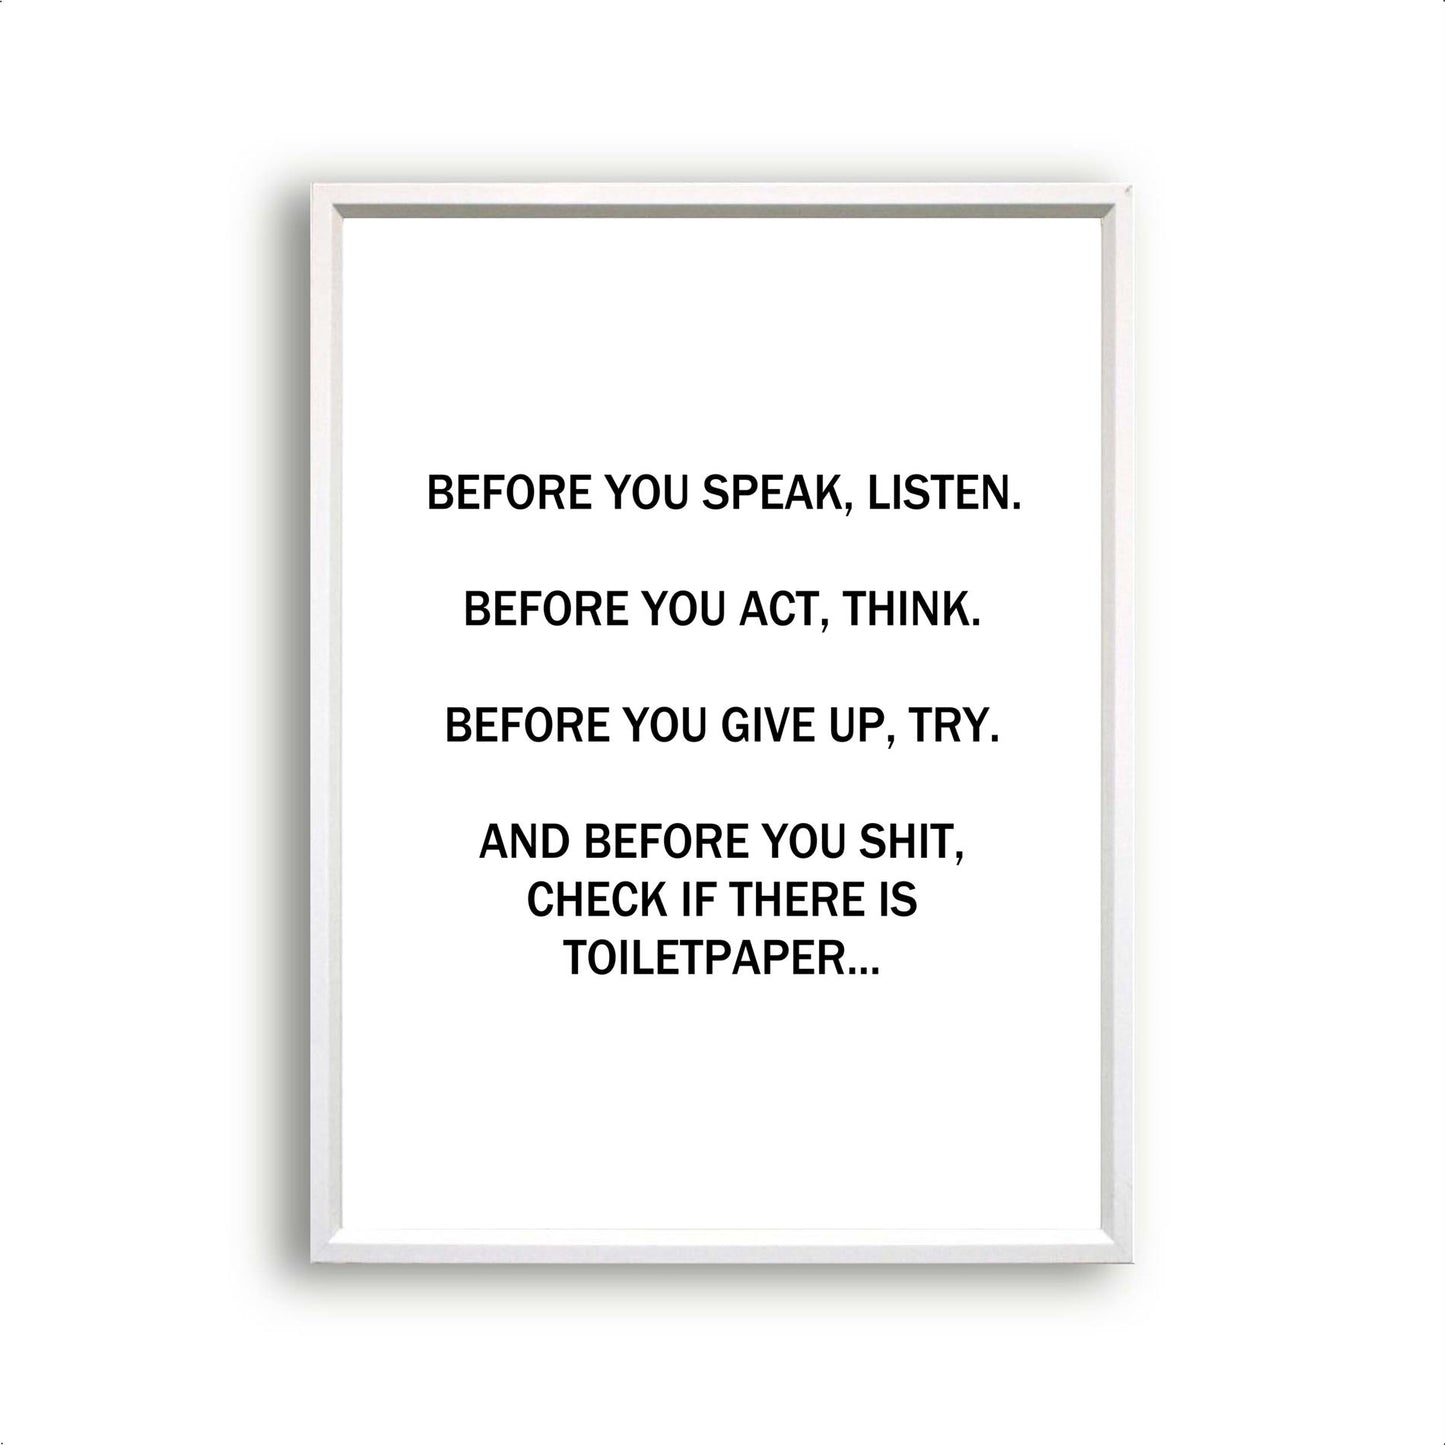 Before you speak listen WC - Teksten / Motivatie